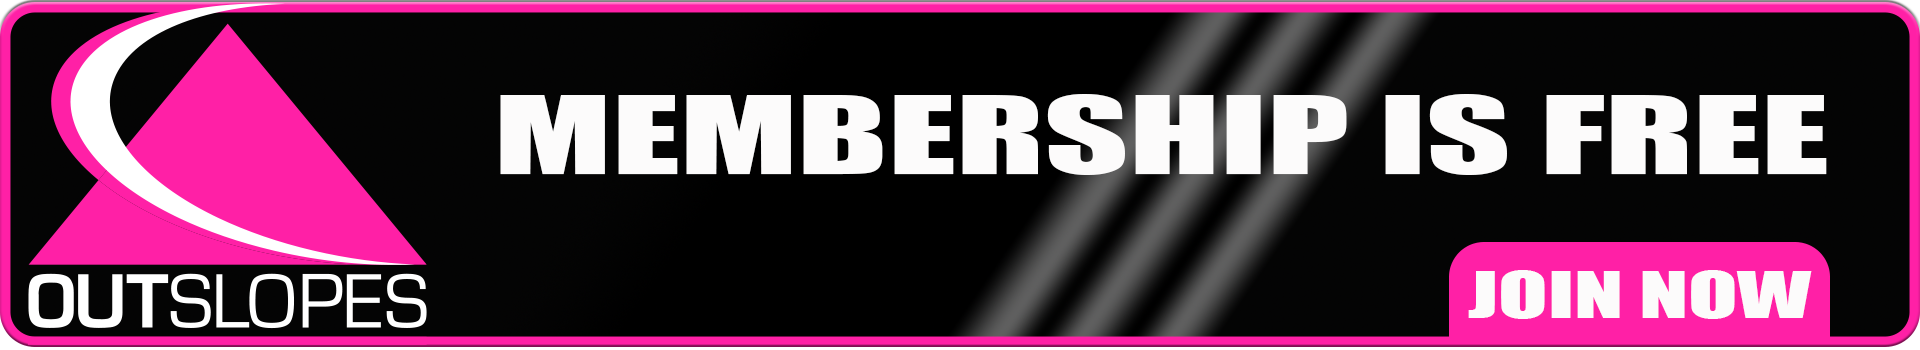 OS-Membership-Banner